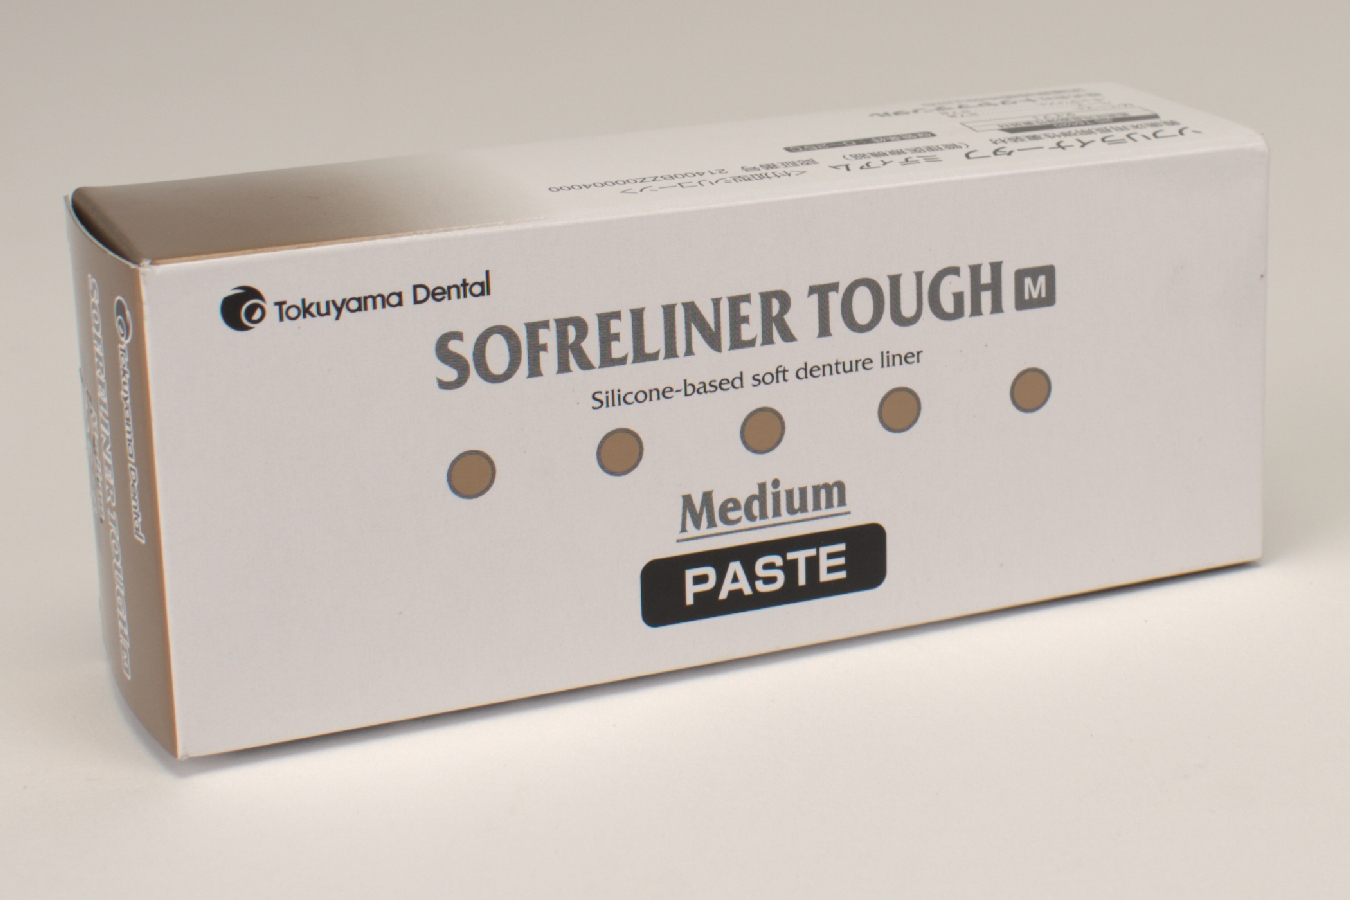 Sofreliner Tough M Paste  2x27g Pa